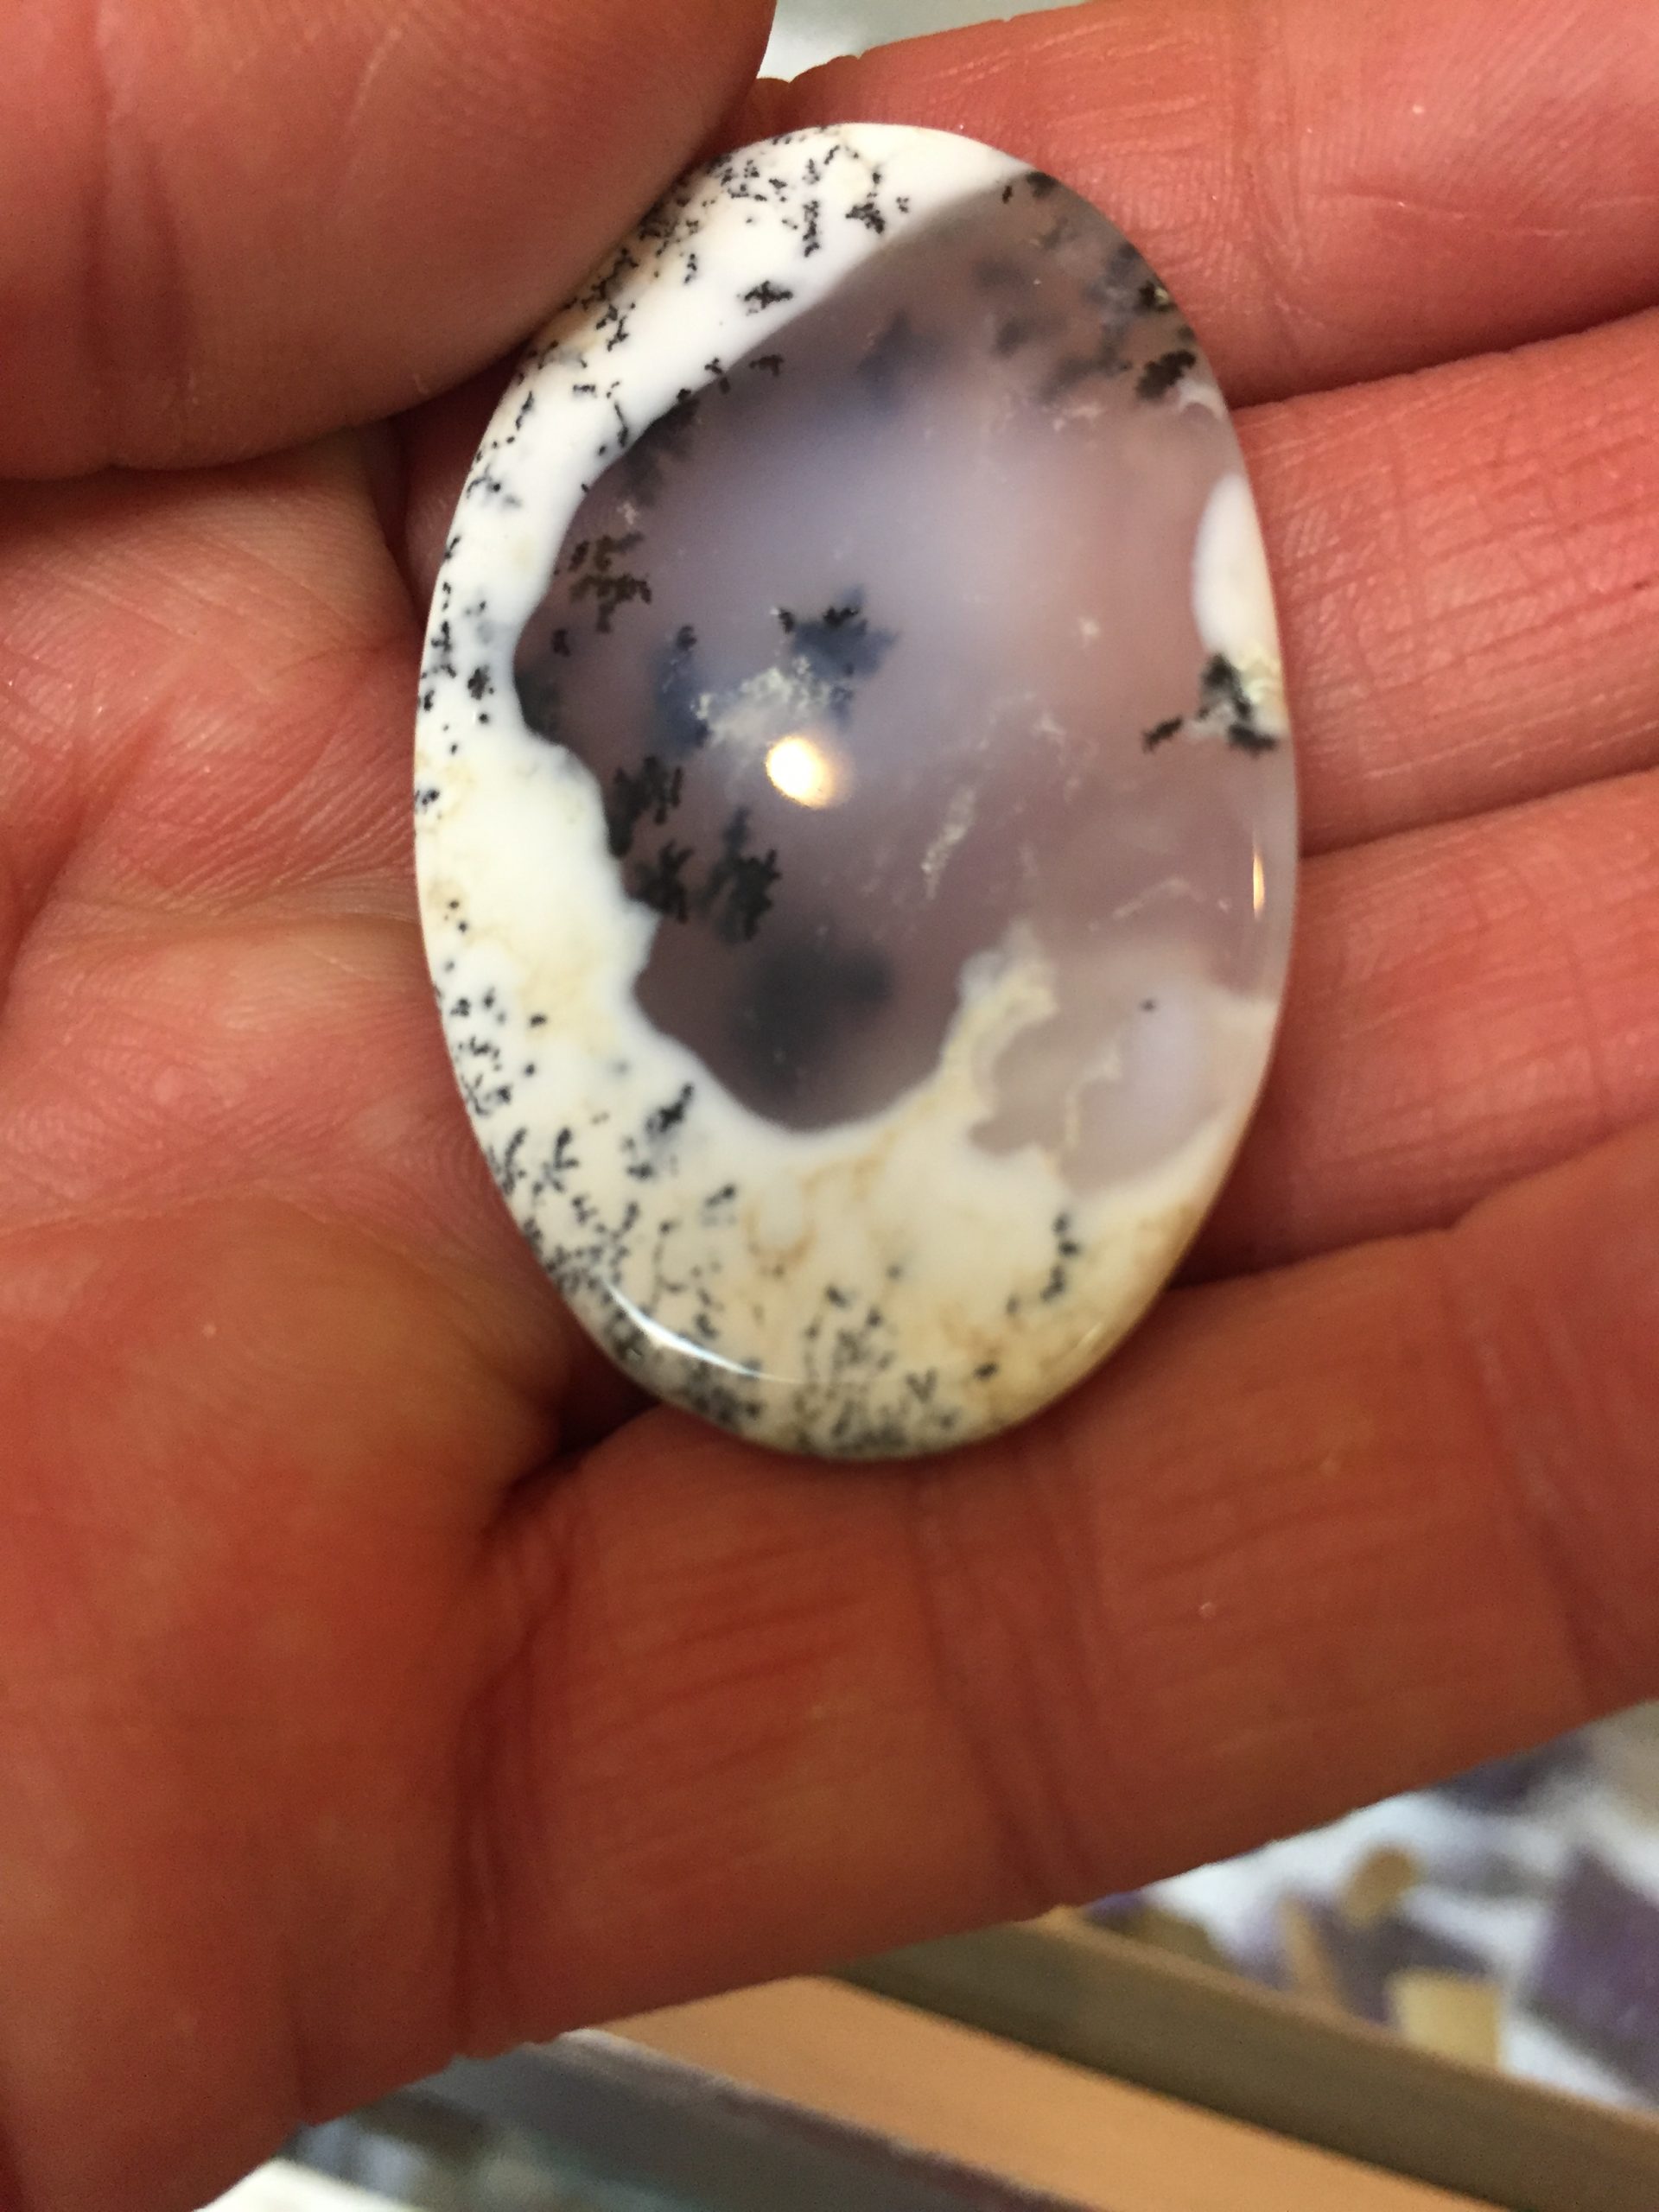 green dendrite opal